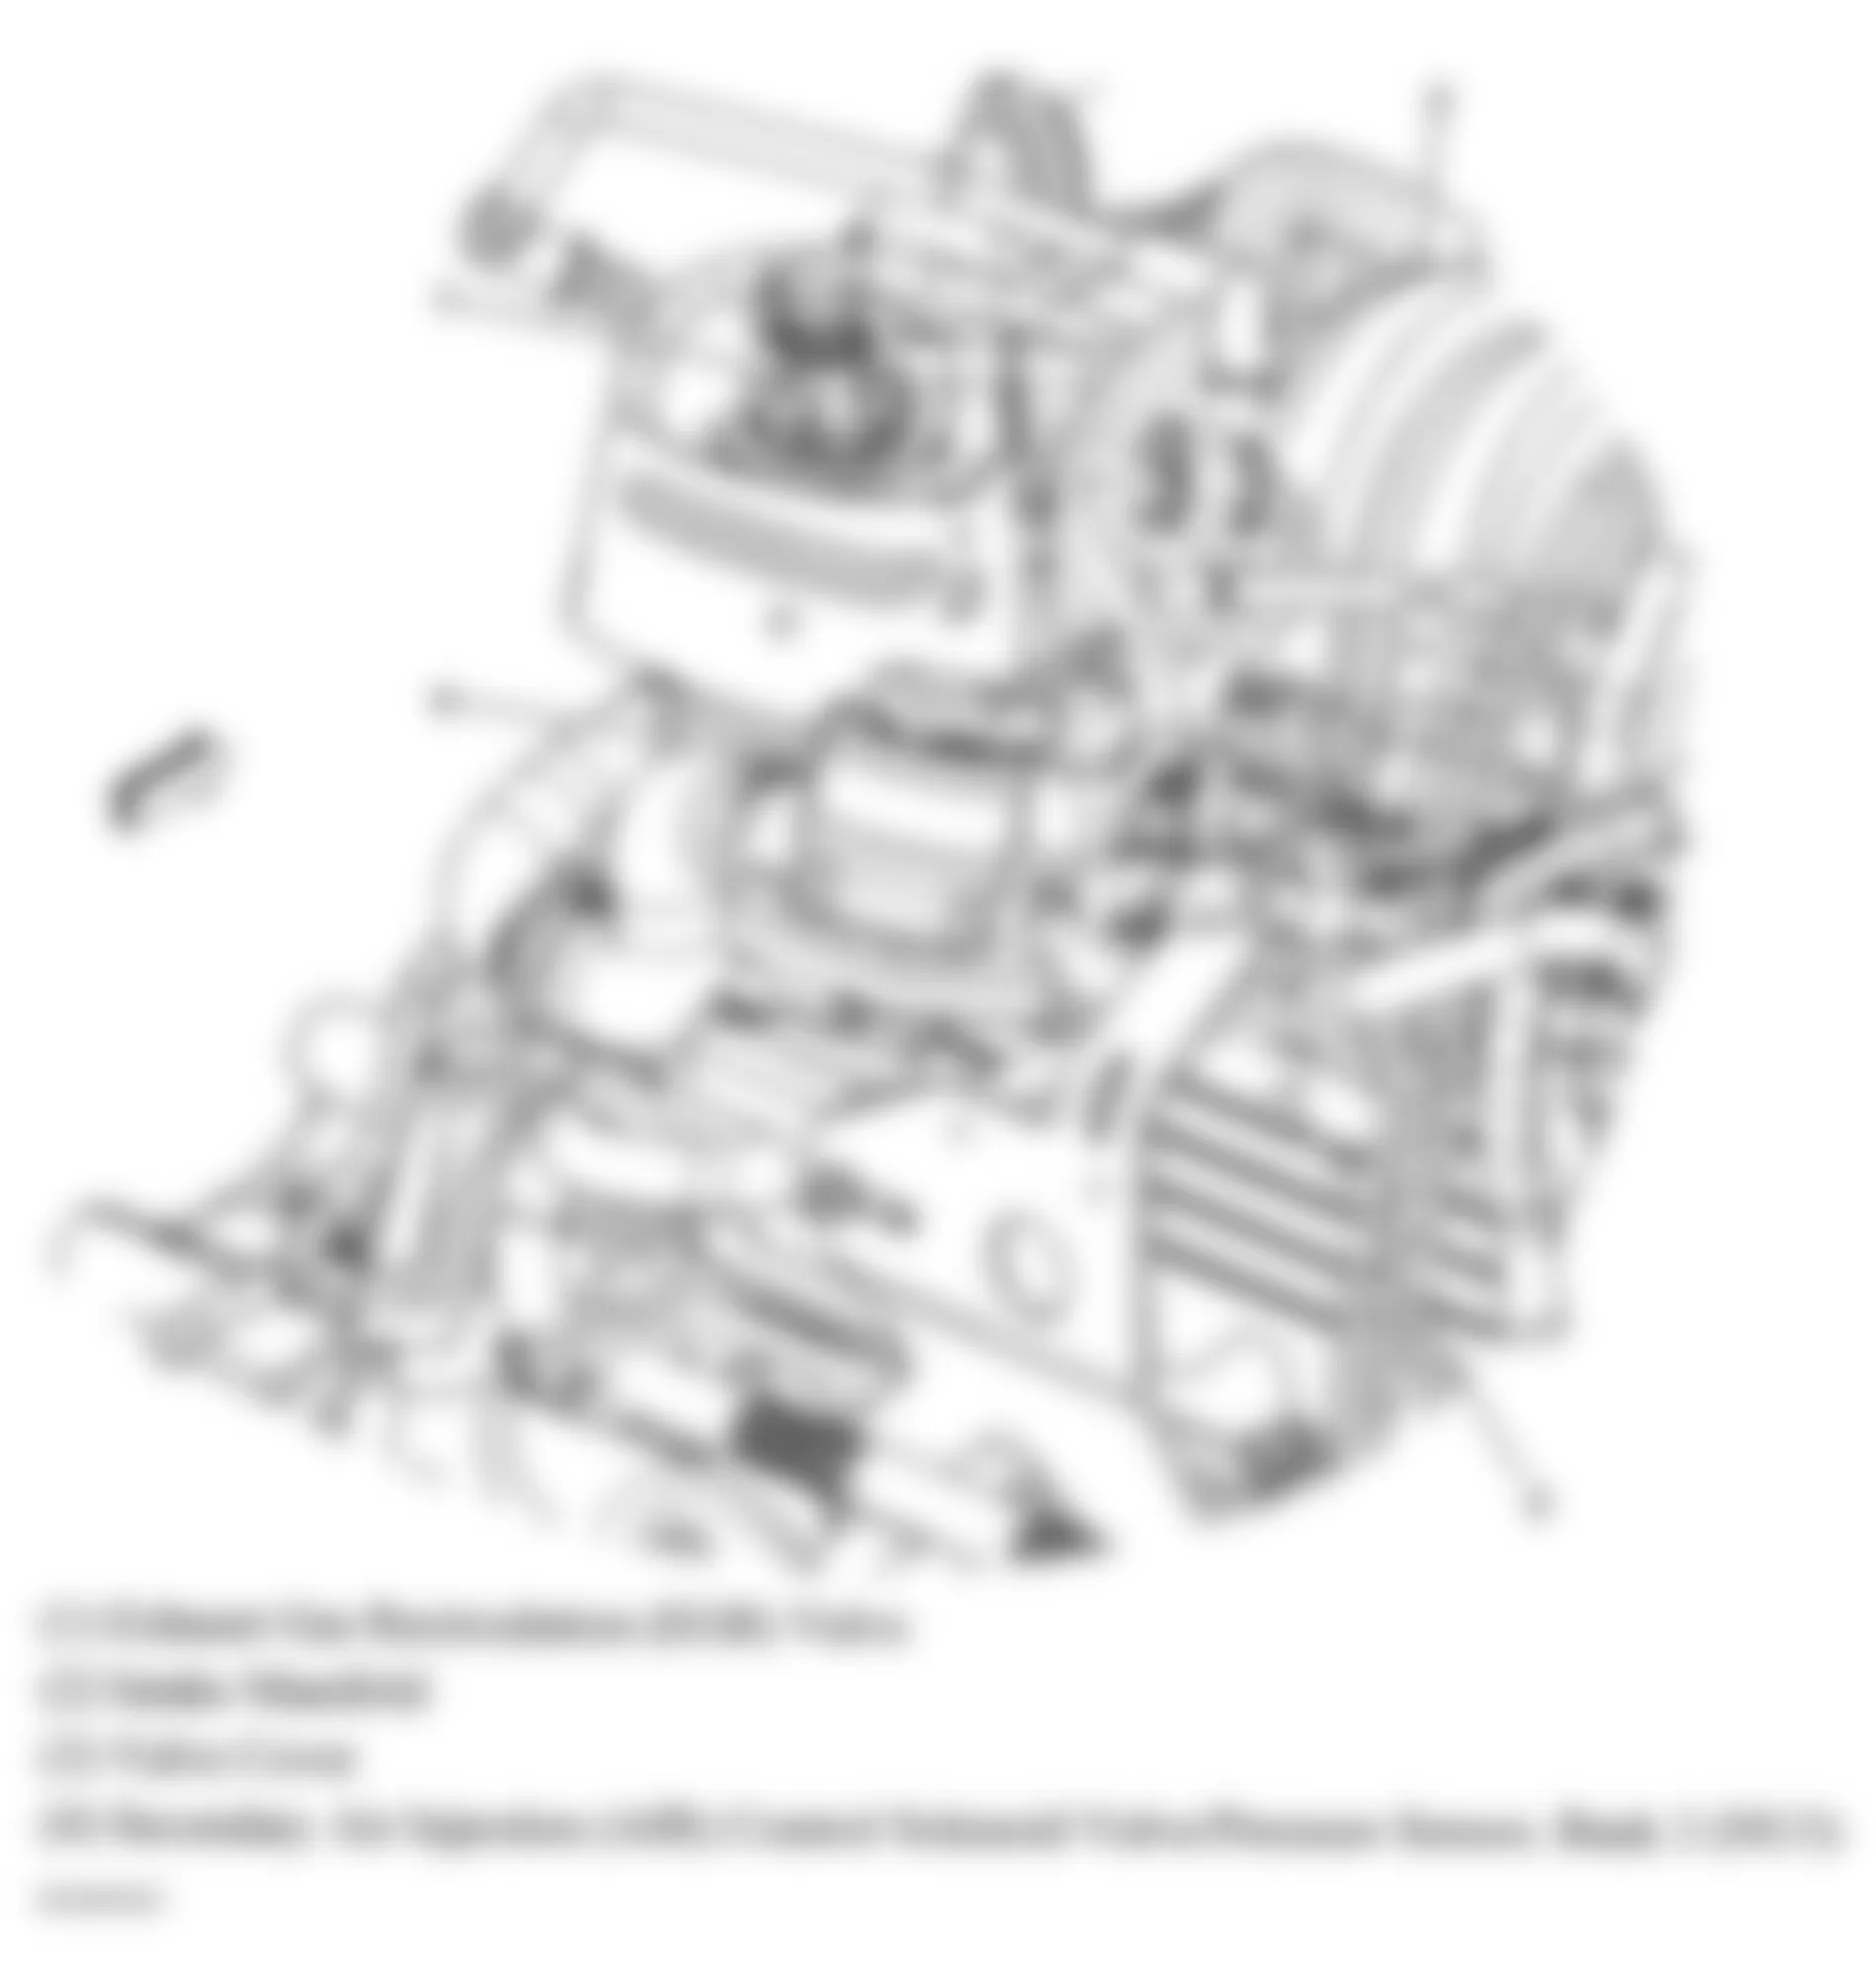 Buick Allure CXL 2005 - Component Locations -  Upper Rear Of Engine (3.8L)